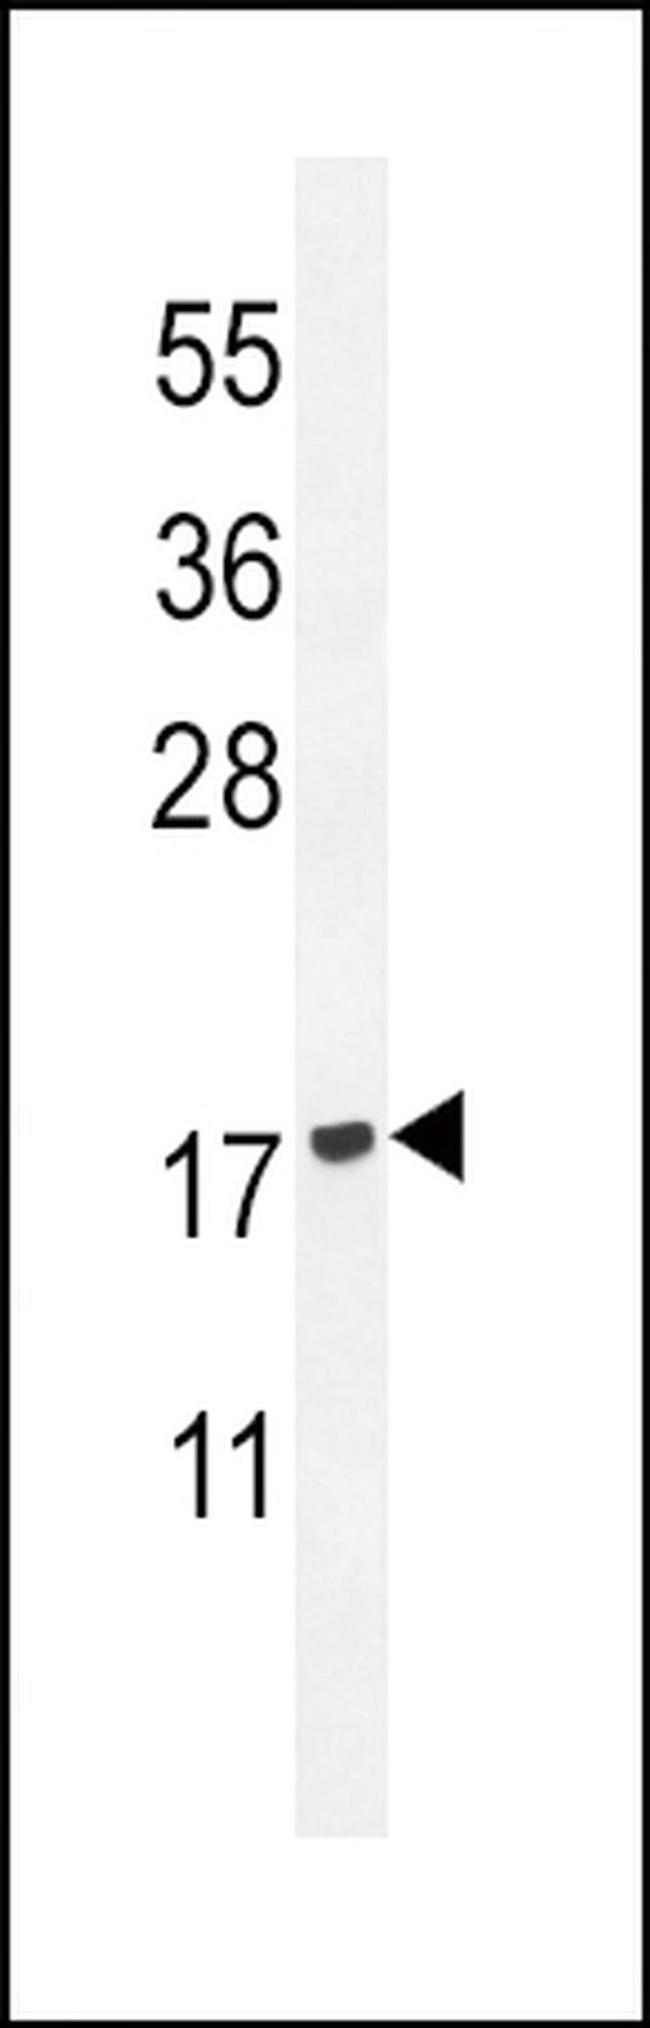 PLA2G2D Antibody in Western Blot (WB)